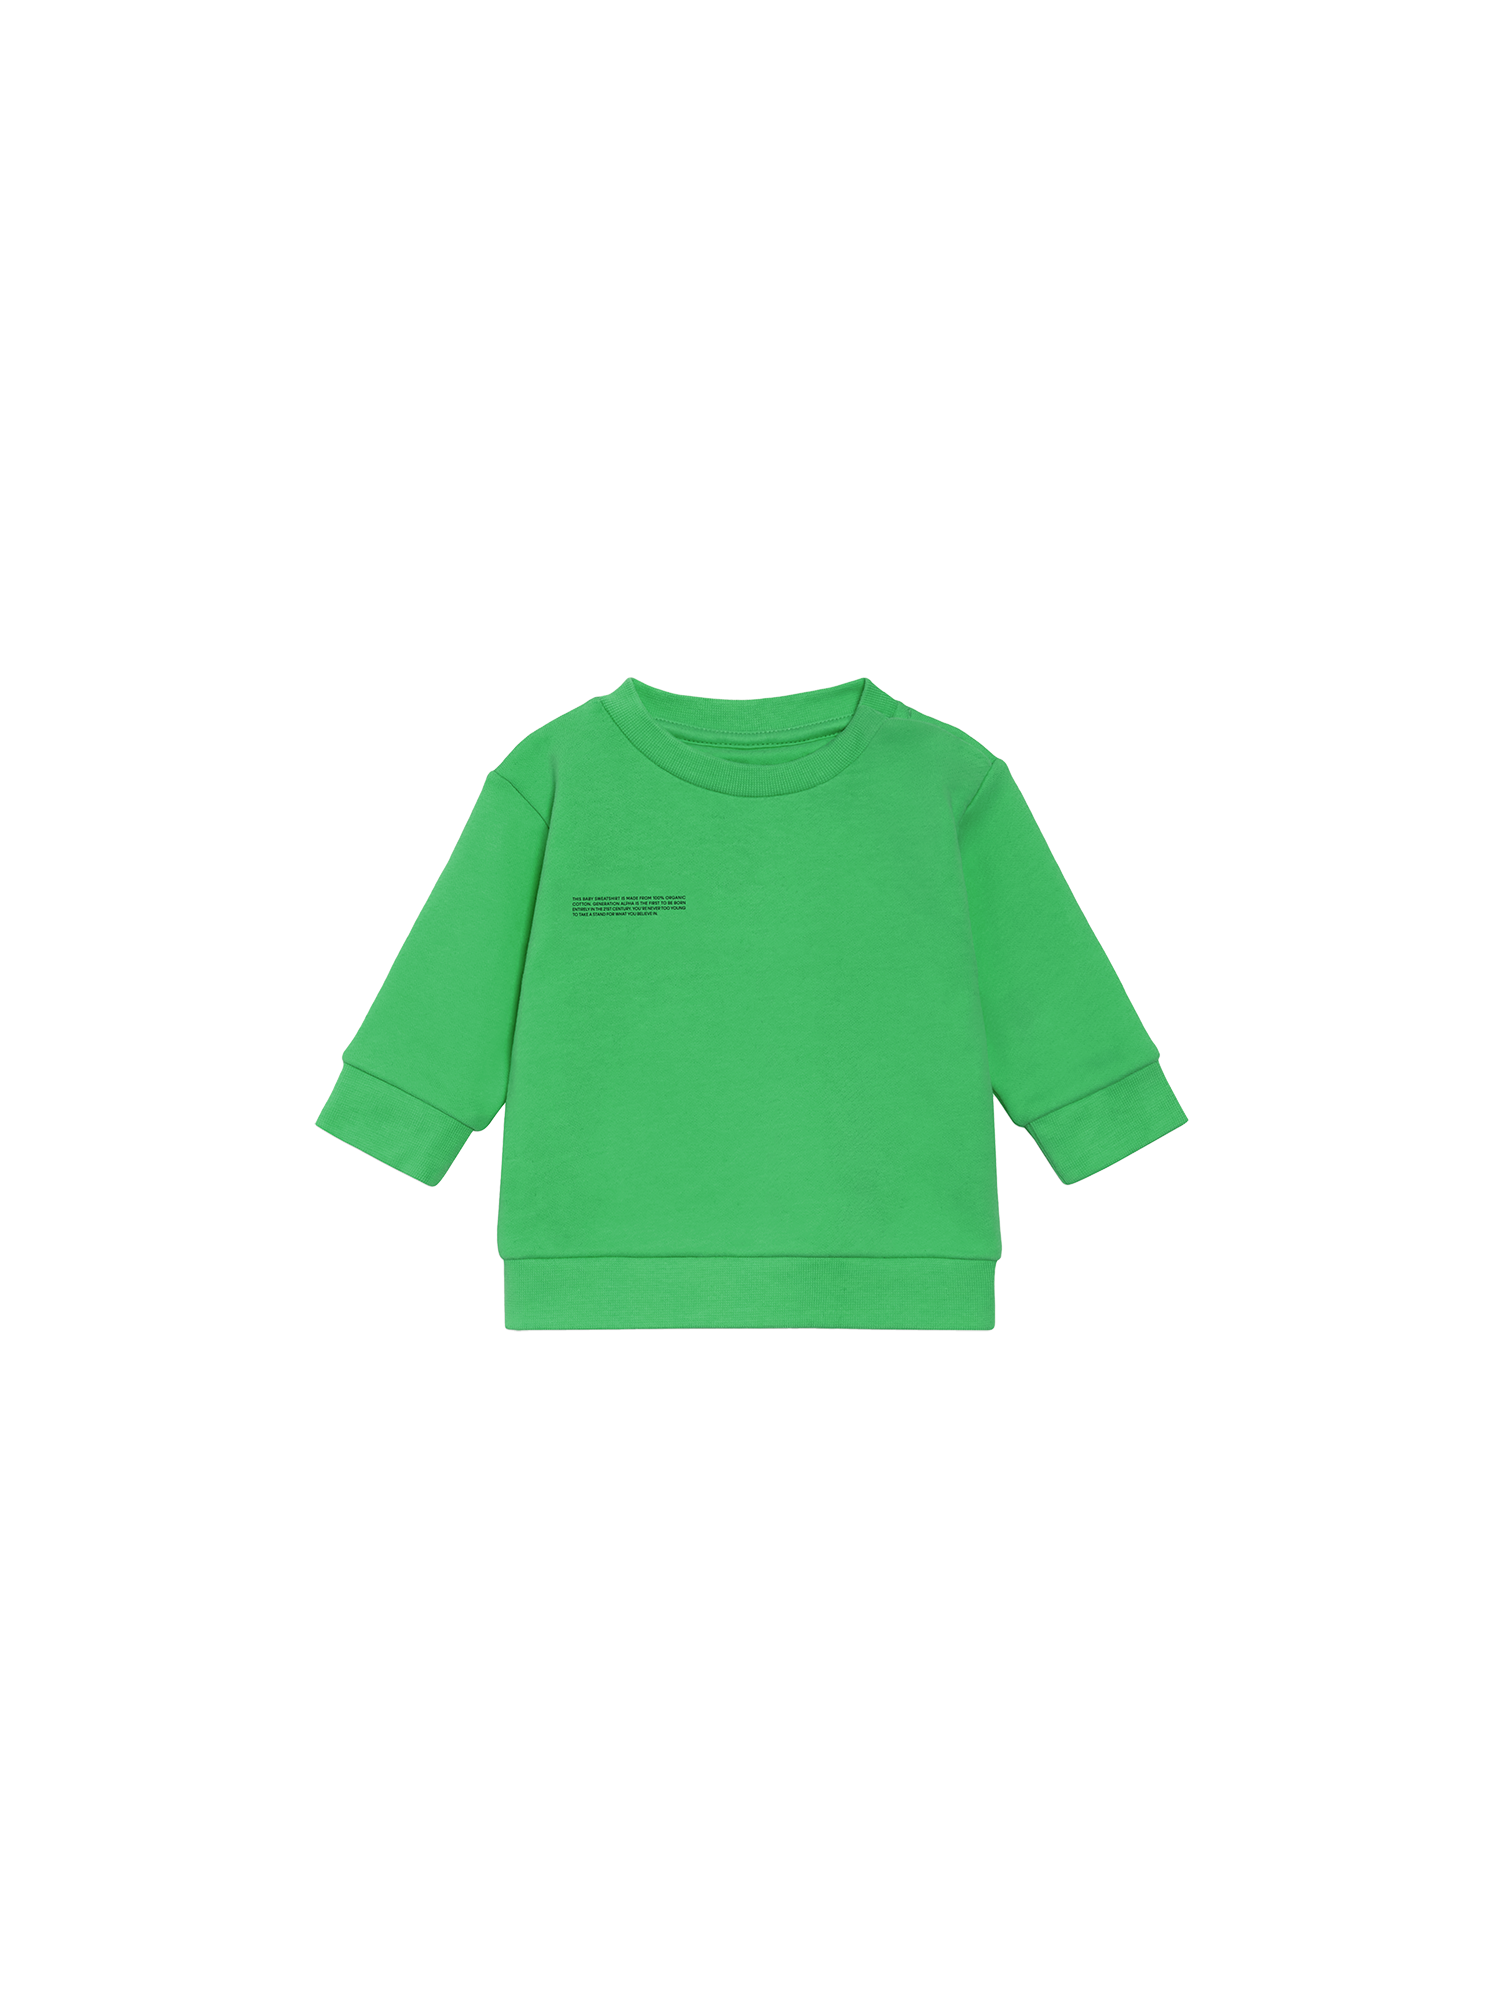 365 Baby Sweatshirts—jade green packshot-3